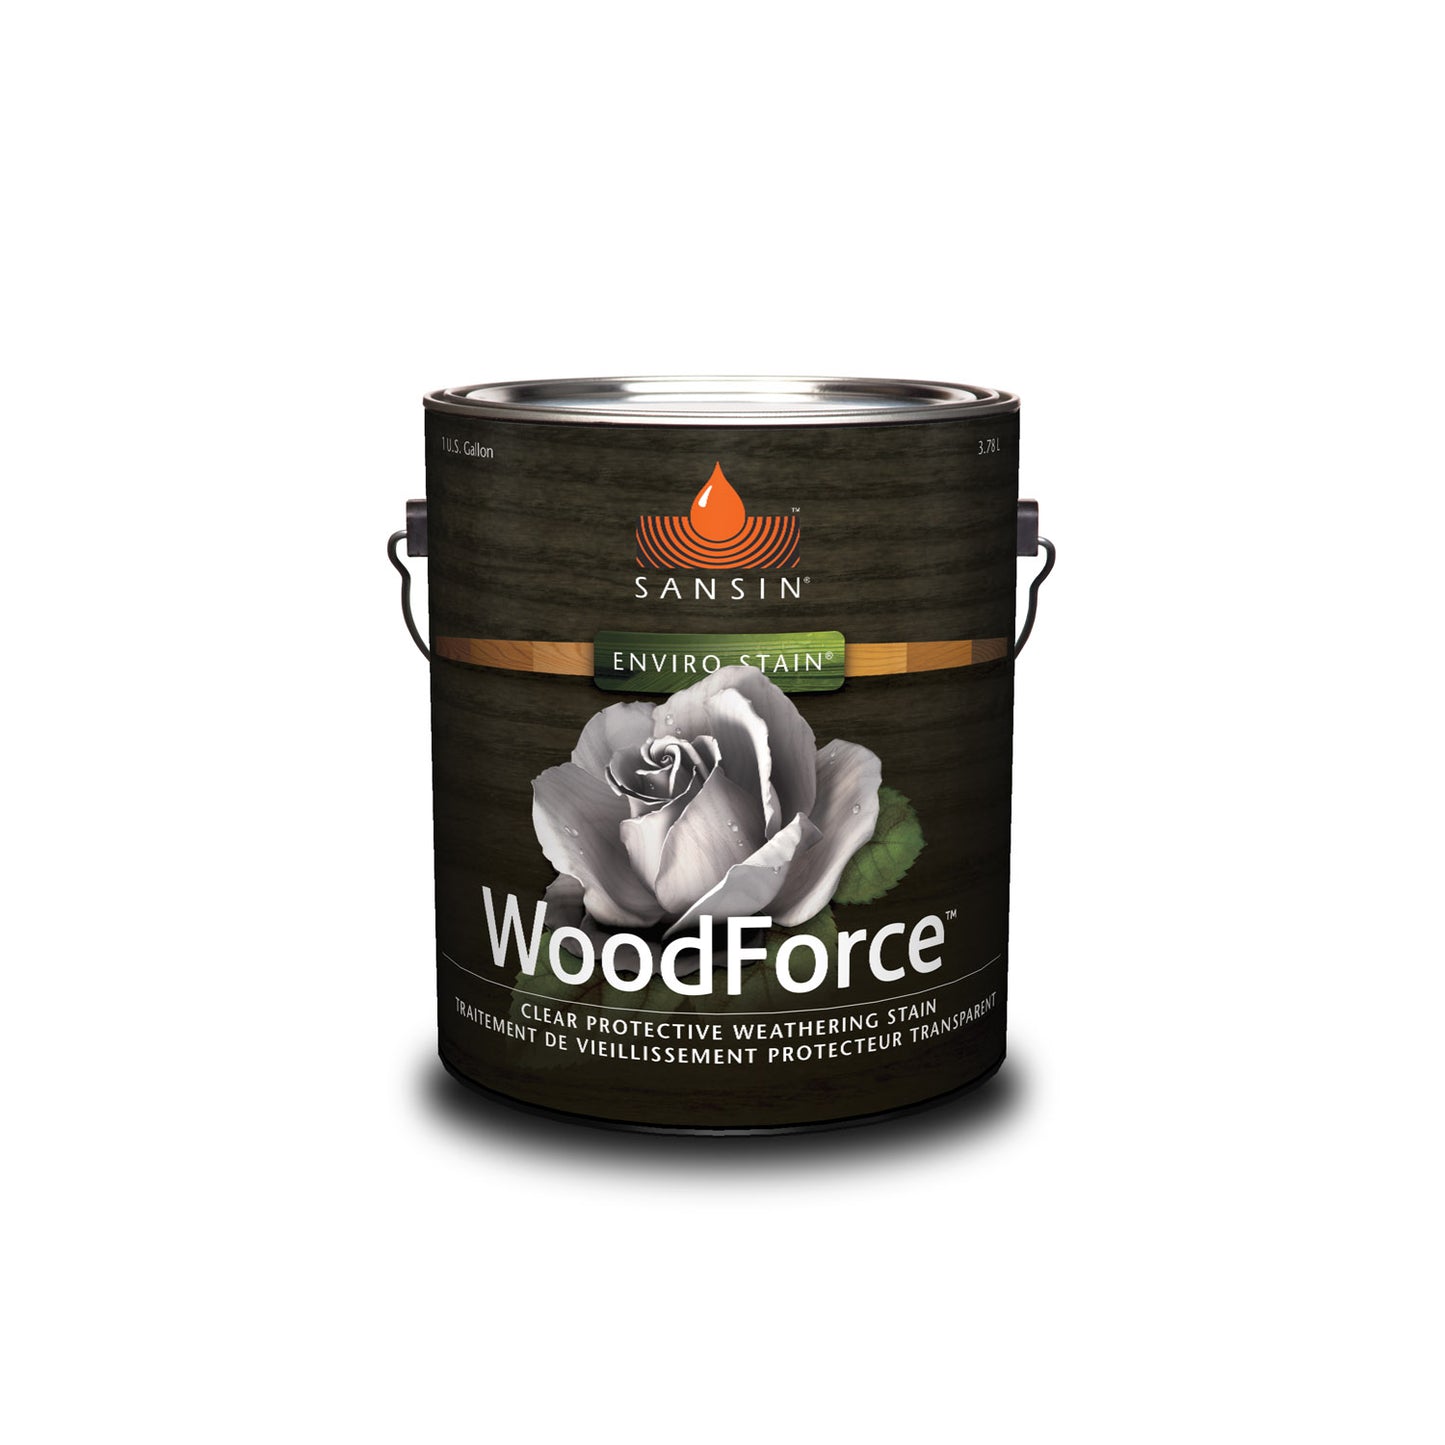 Sansin Woodforce Clear